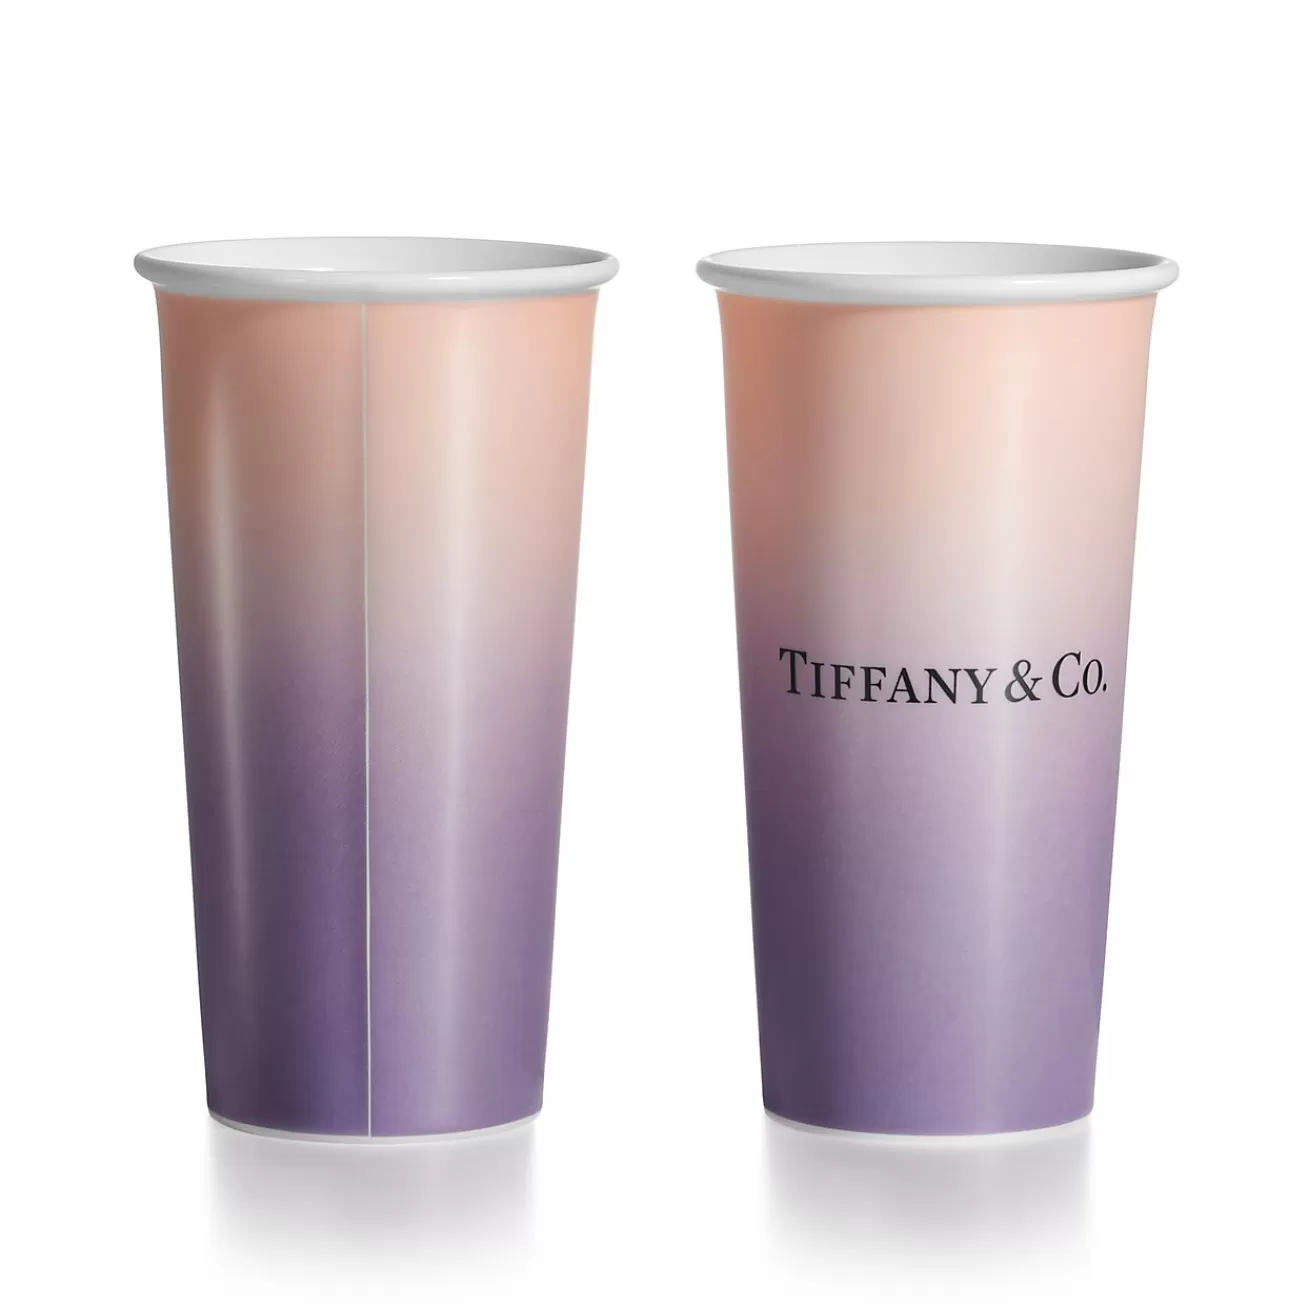 Tiffany & Co. Tiffany Cups Tiffany Large Coffee Cups in Infinity Morganite Bone China | ^ Tableware | Coffee & Tea